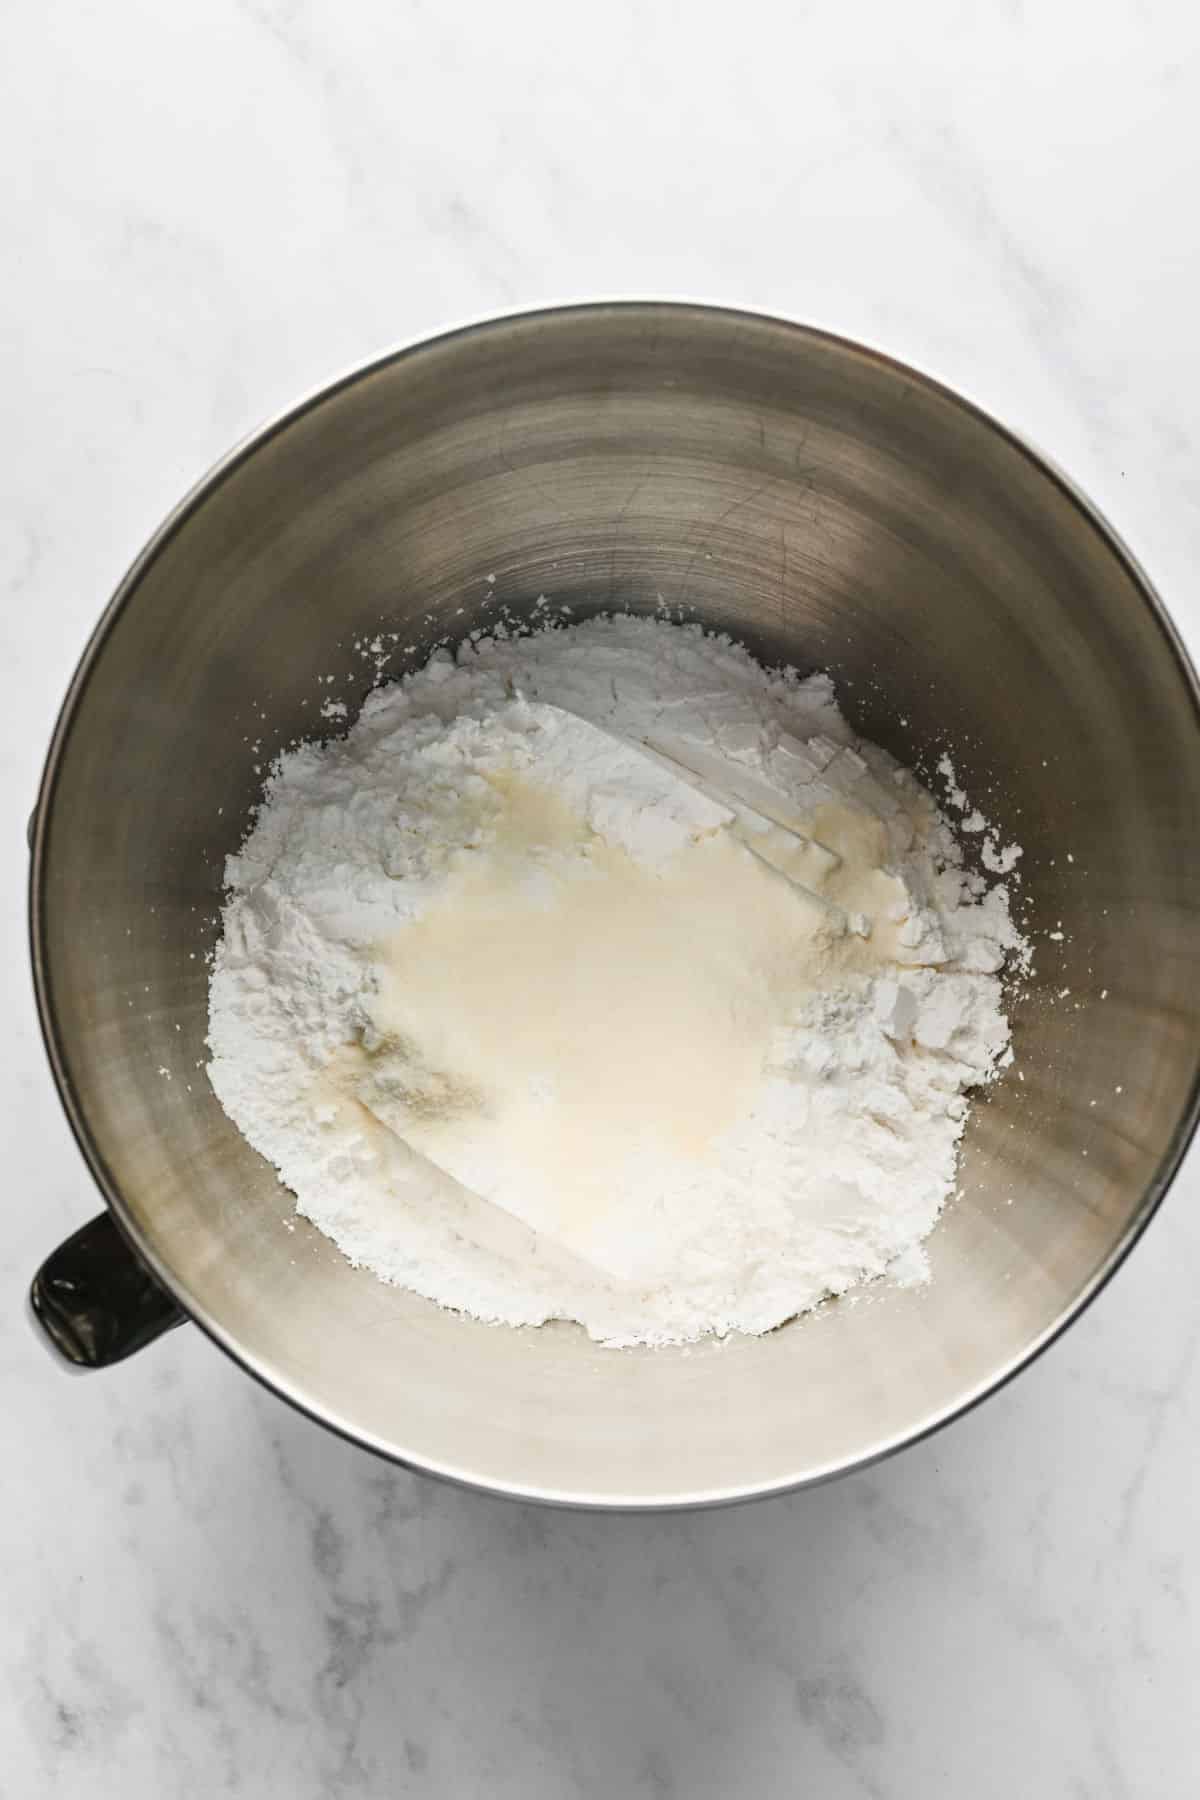 Powdered sugar and meringue powder in a silver mixing bowl. 